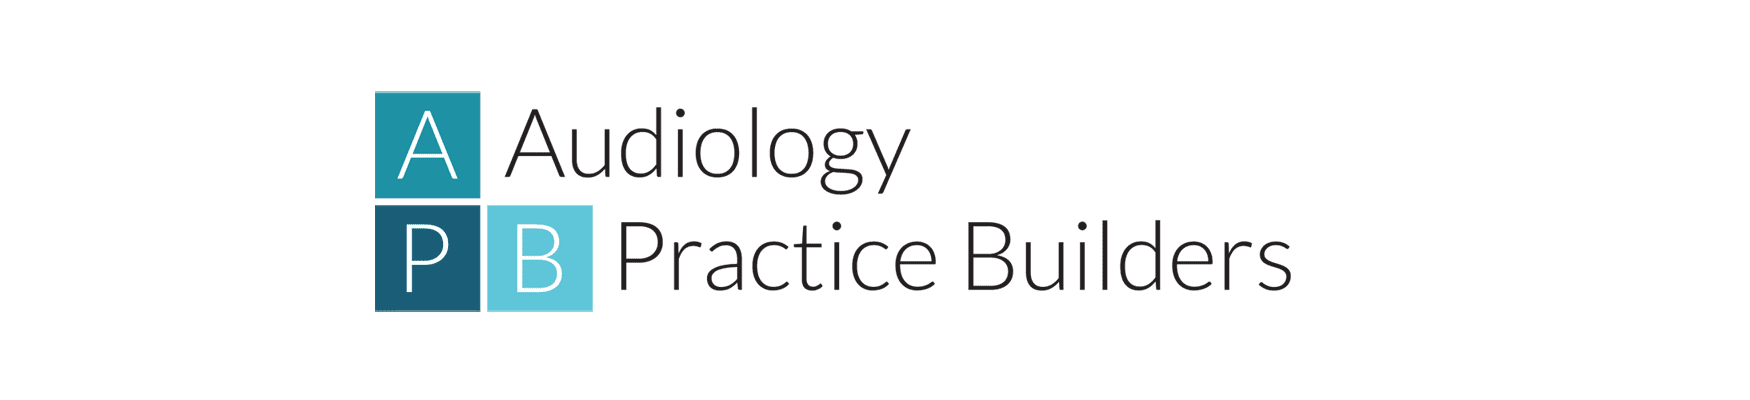 Audiology Practice Builders